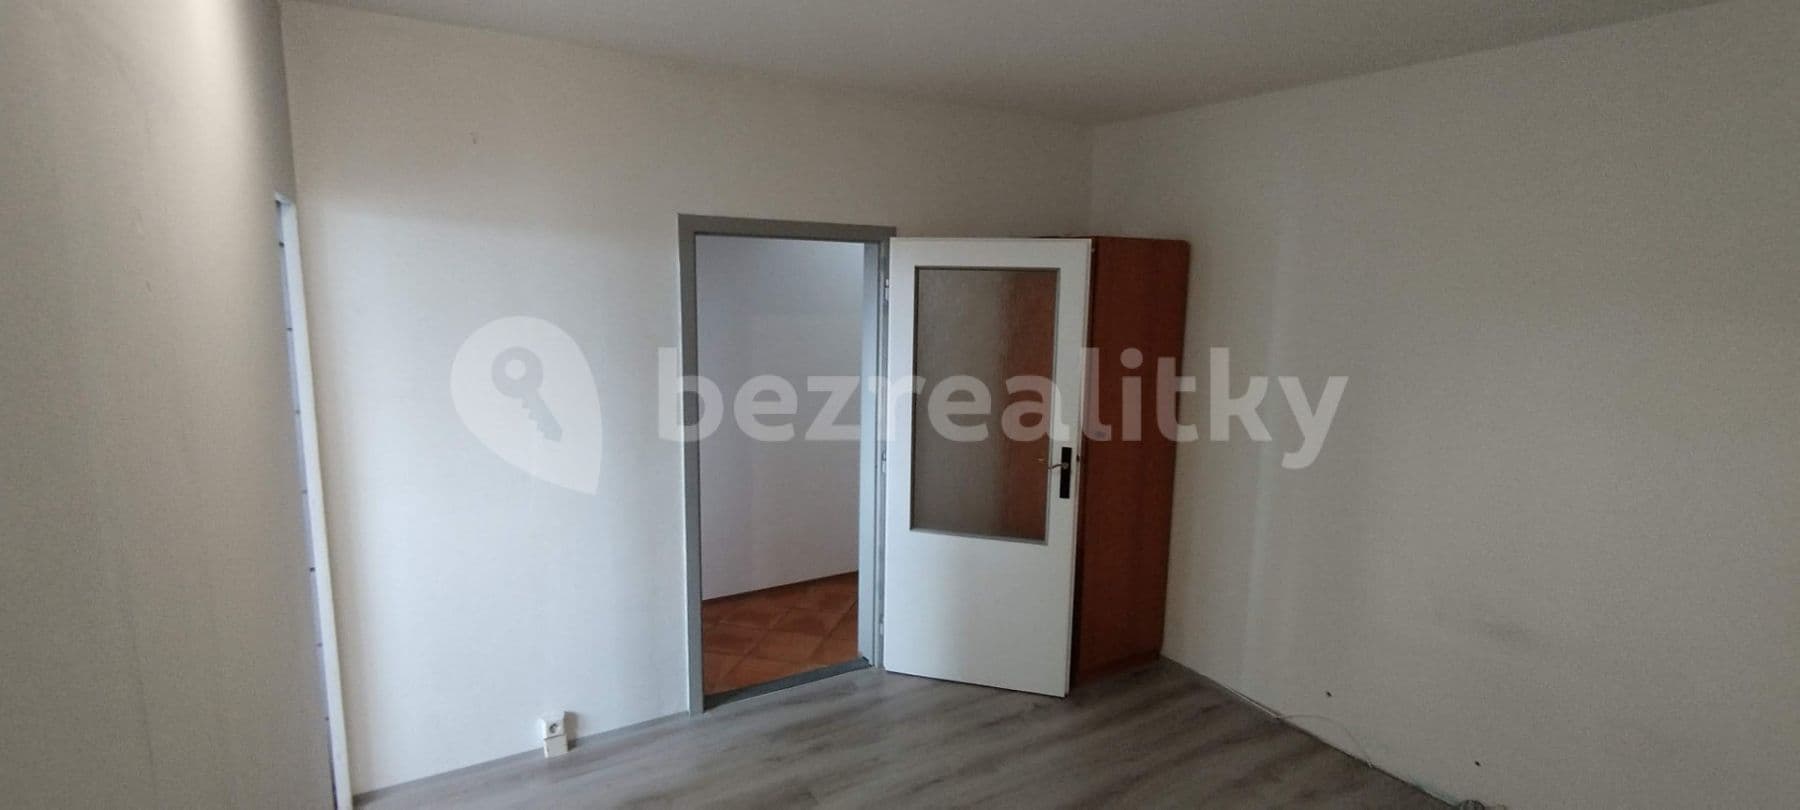 1 bedroom flat for sale, 49 m², Rerychova, Brno, Jihomoravský Region